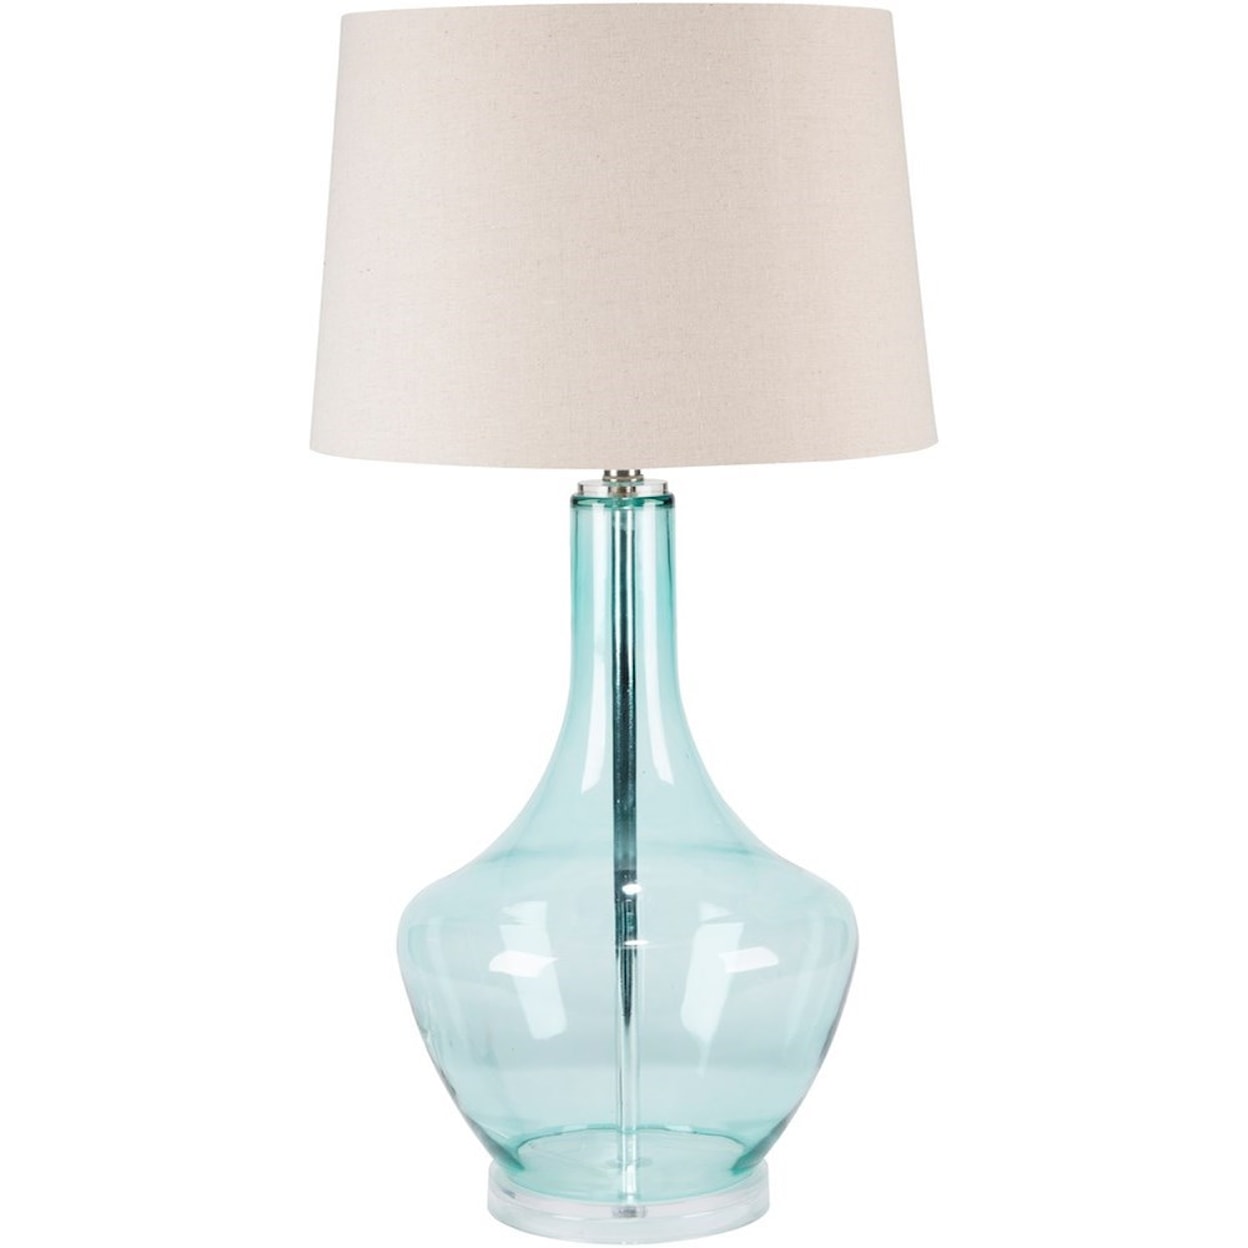 Surya Easton Transparent Blue Coastal Table Lamp